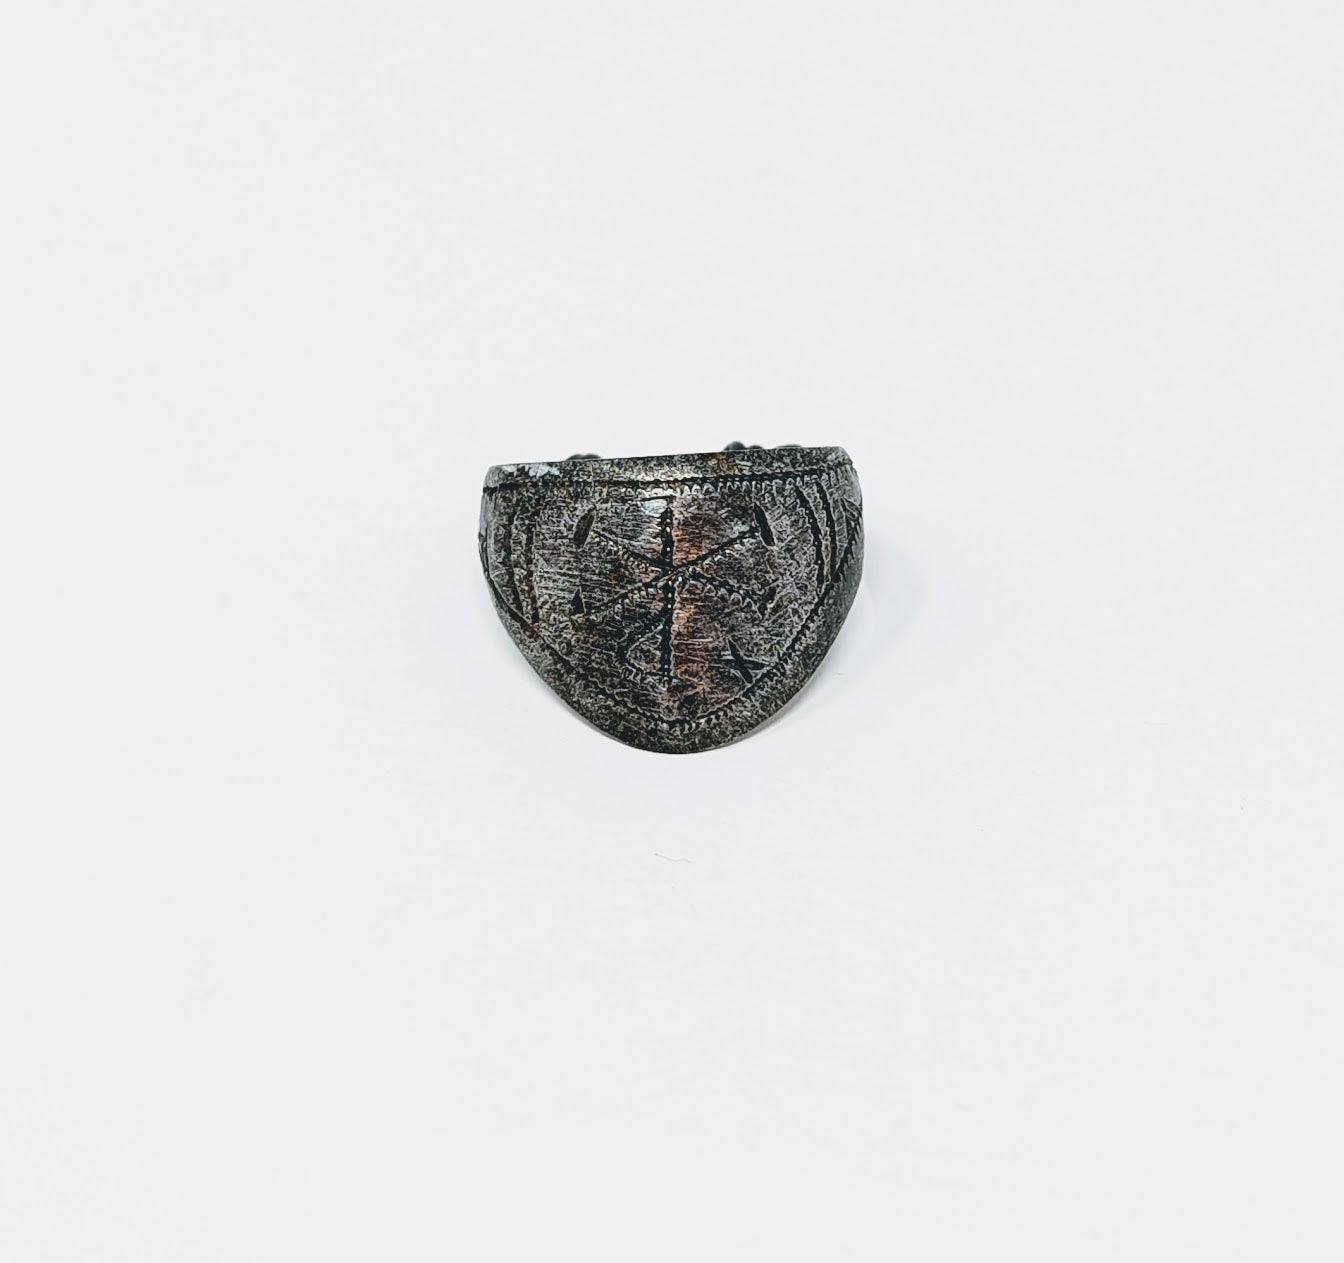 Antique Roman Silver Legionary Archer's Ring with Inscription on Bezel